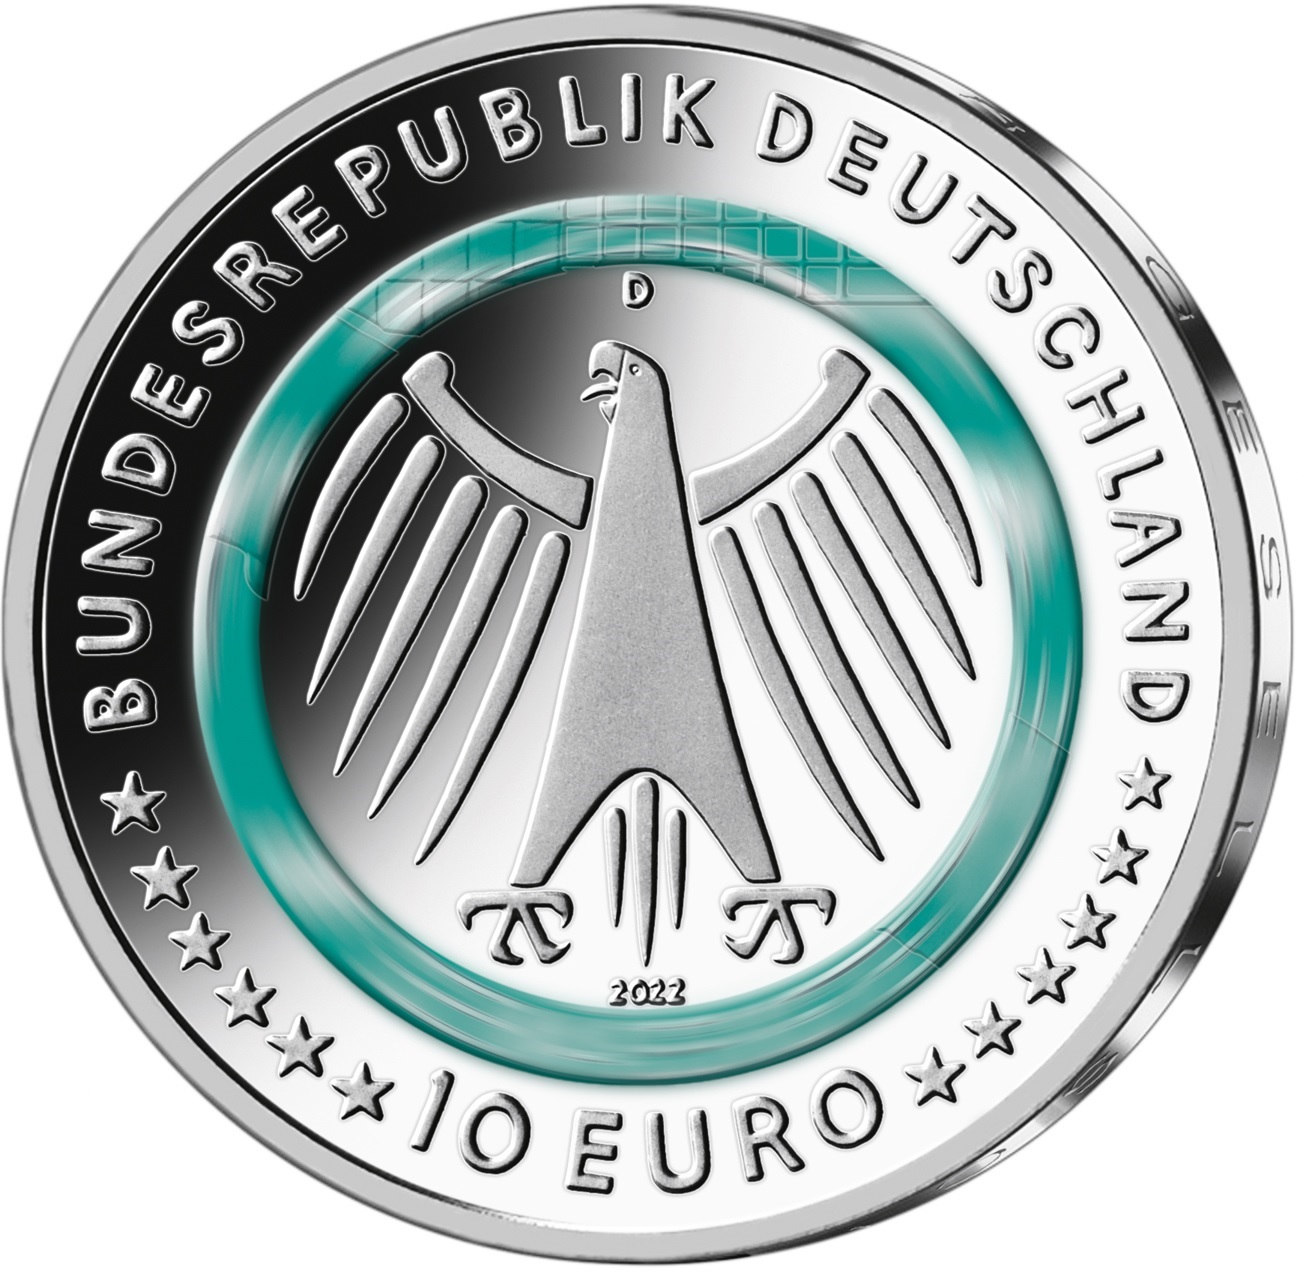 (EUR03.Proof.2022.90n322s5) 10 euro Germany 2022 (random Mint) Proof - Care Obverse (zoom)